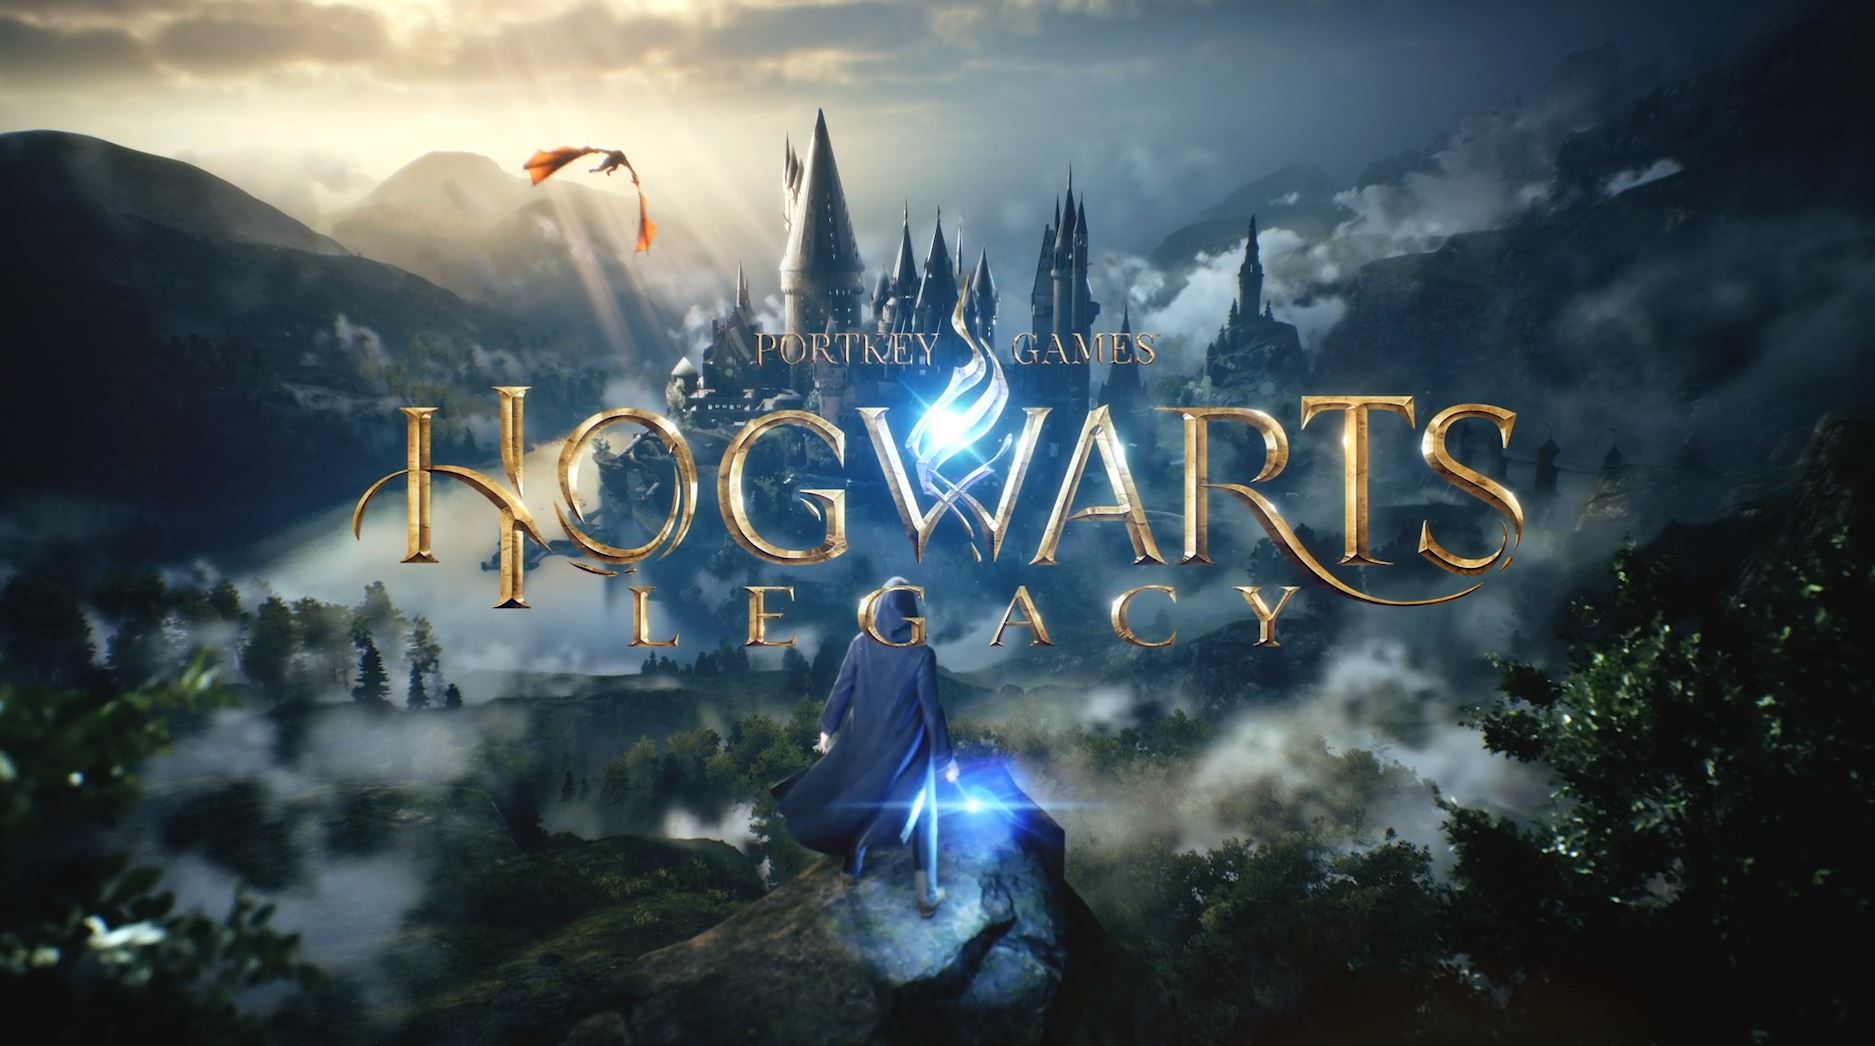 Warner teases more Harry Potter games following Hogwarts Legacy's